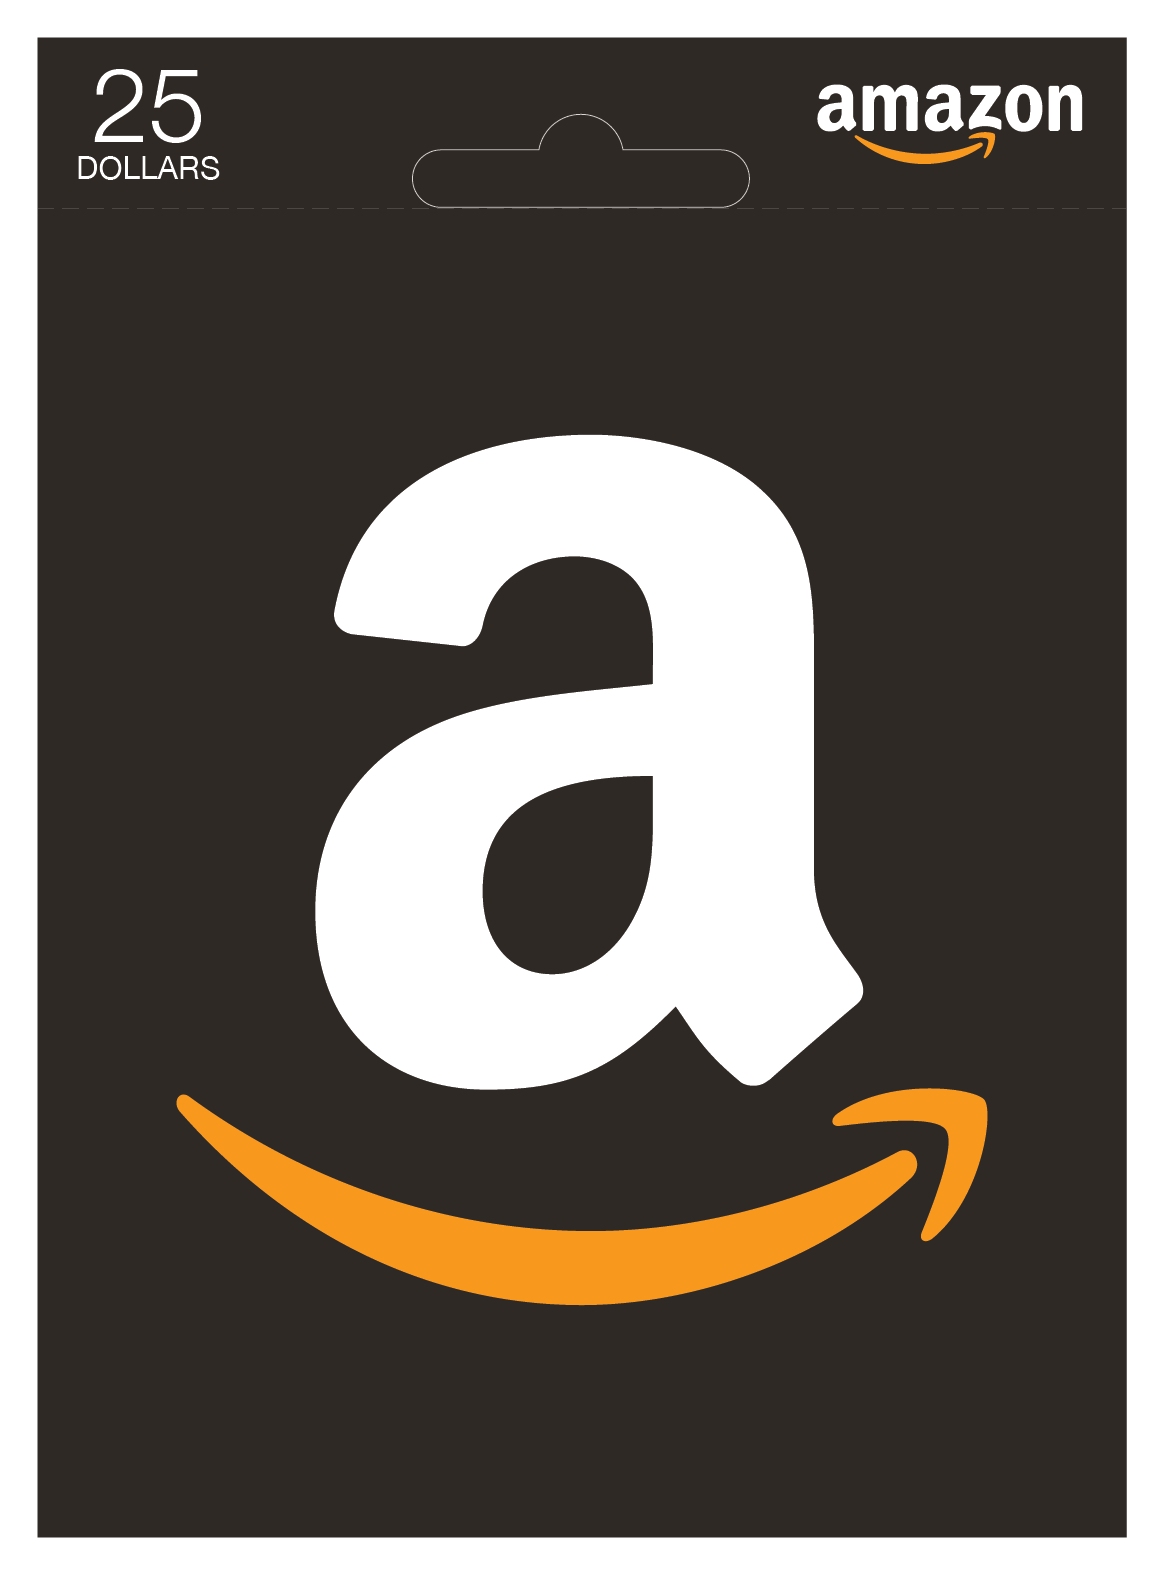 Amazon.ca Gift Card